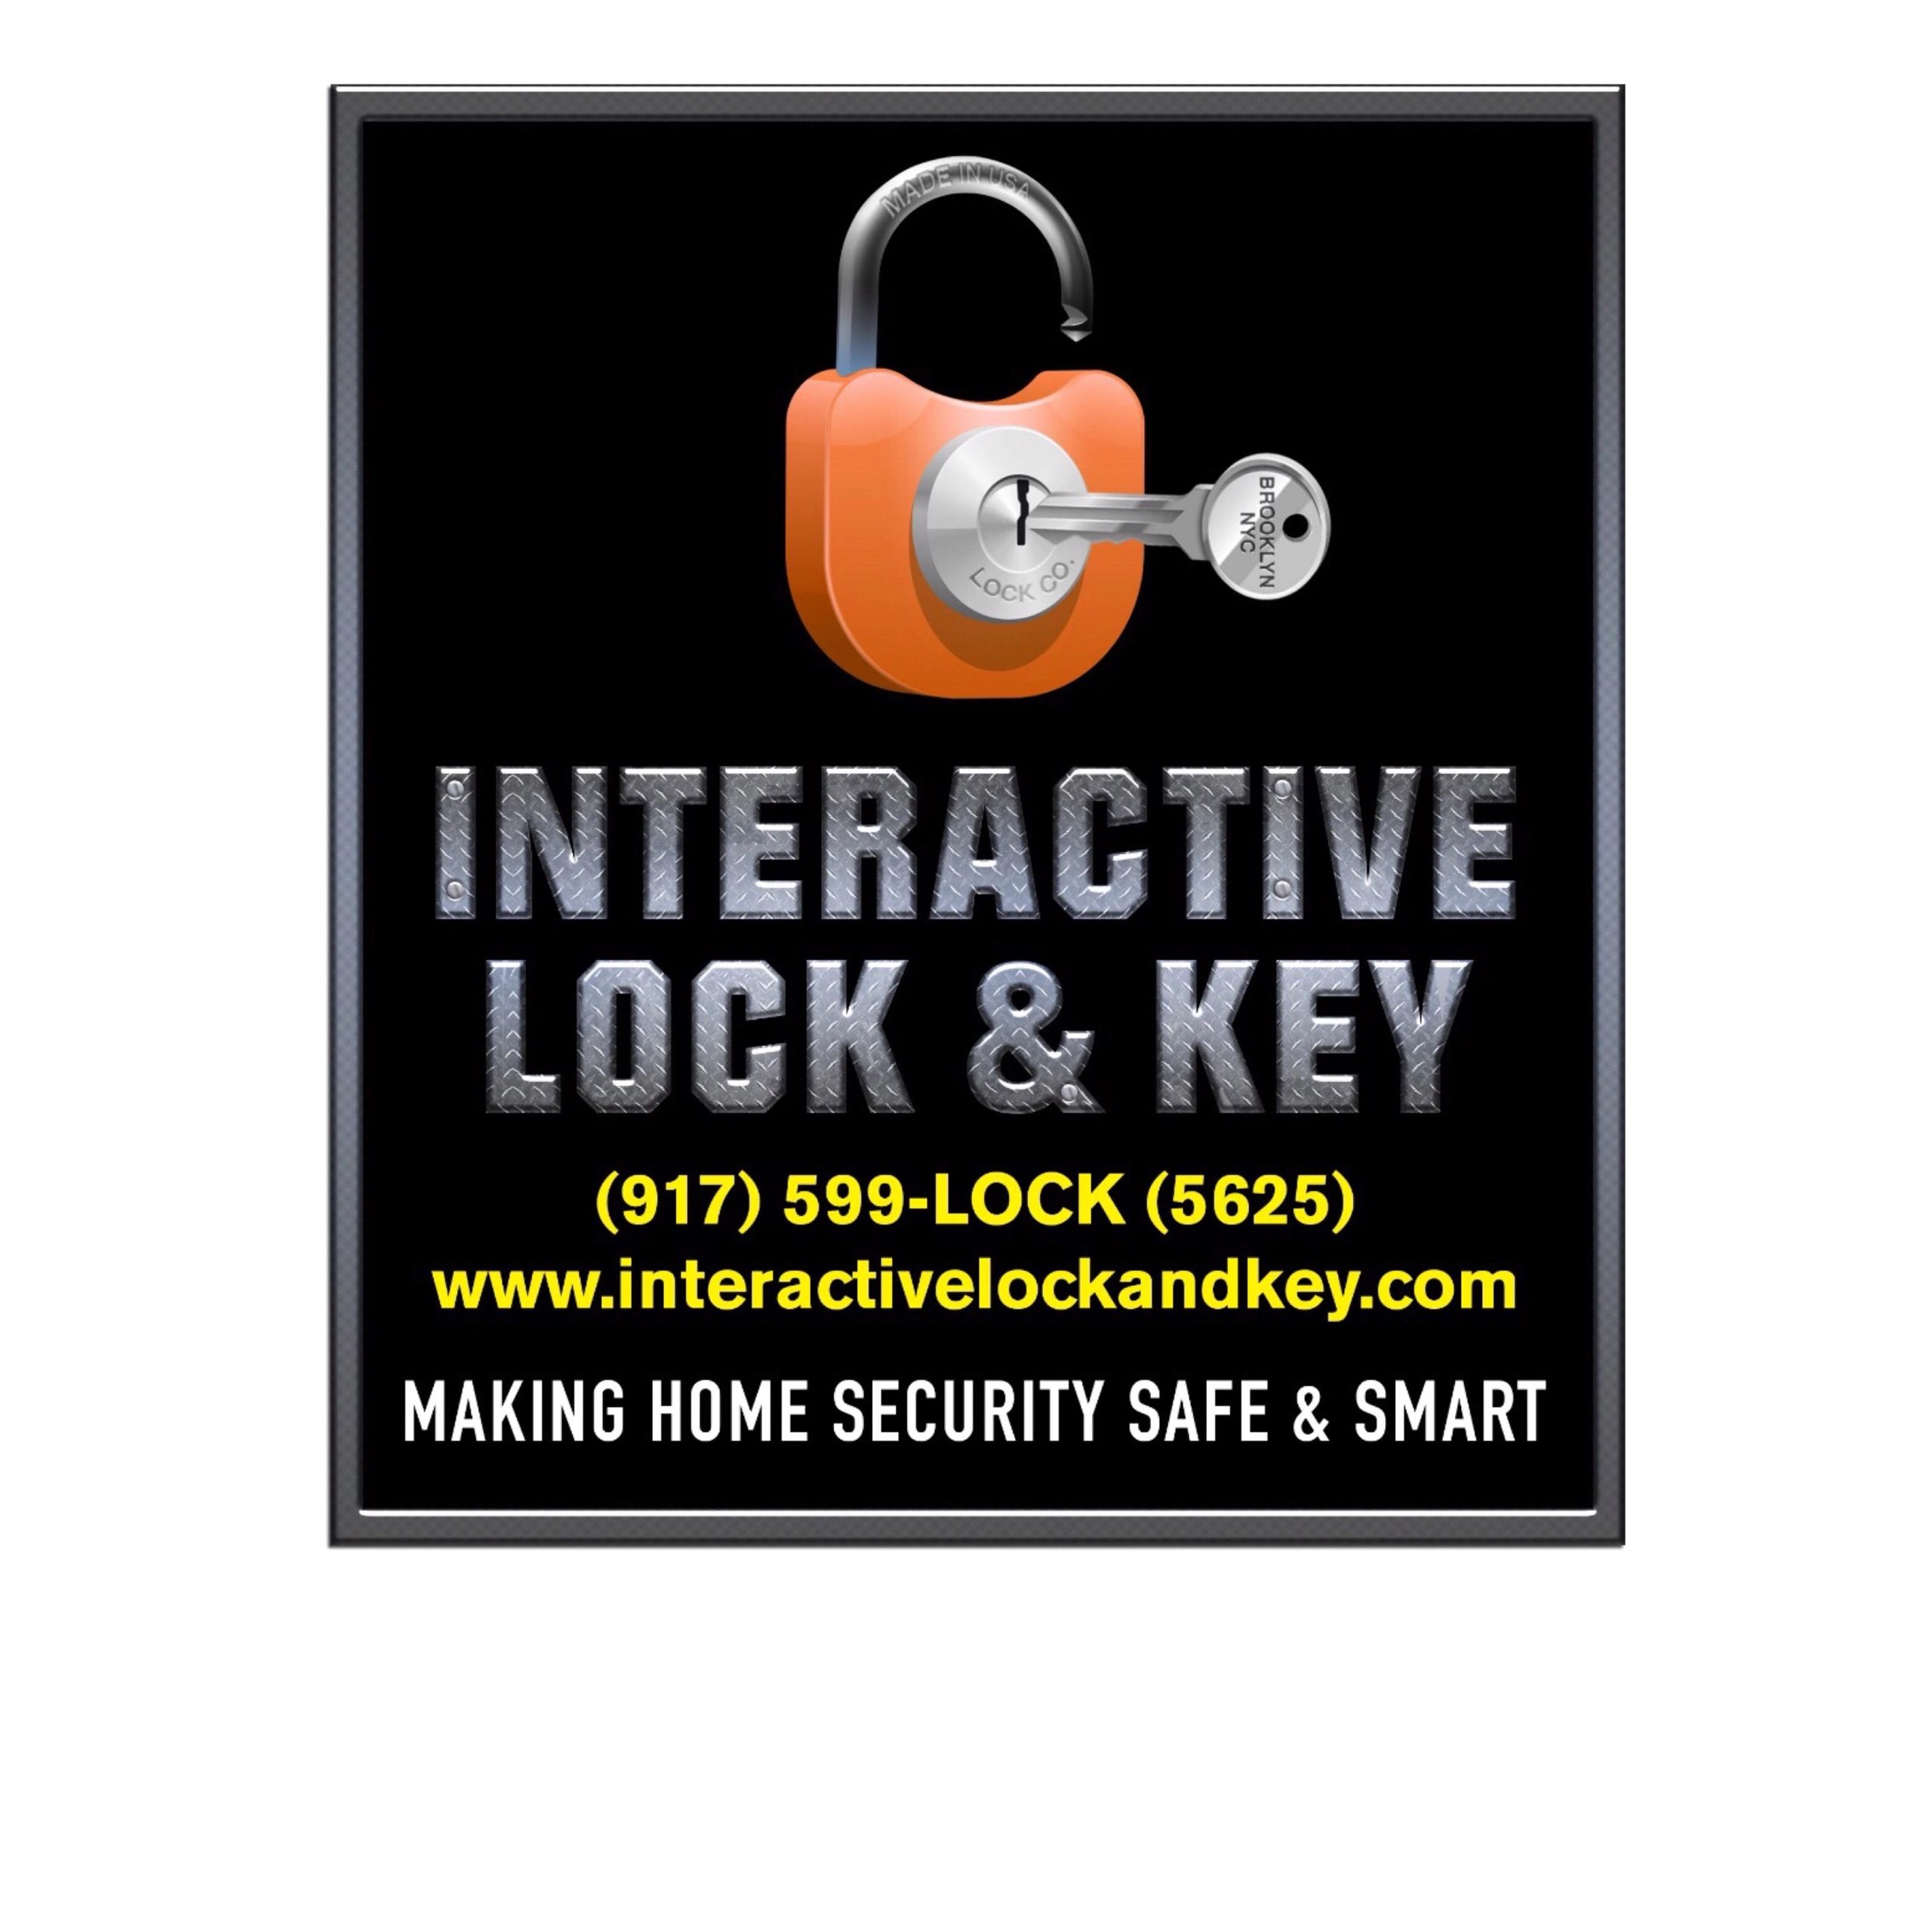 Interactive Lock & Key Emergency Locksmith service in Brooklyn NY smart locks, new lock installation